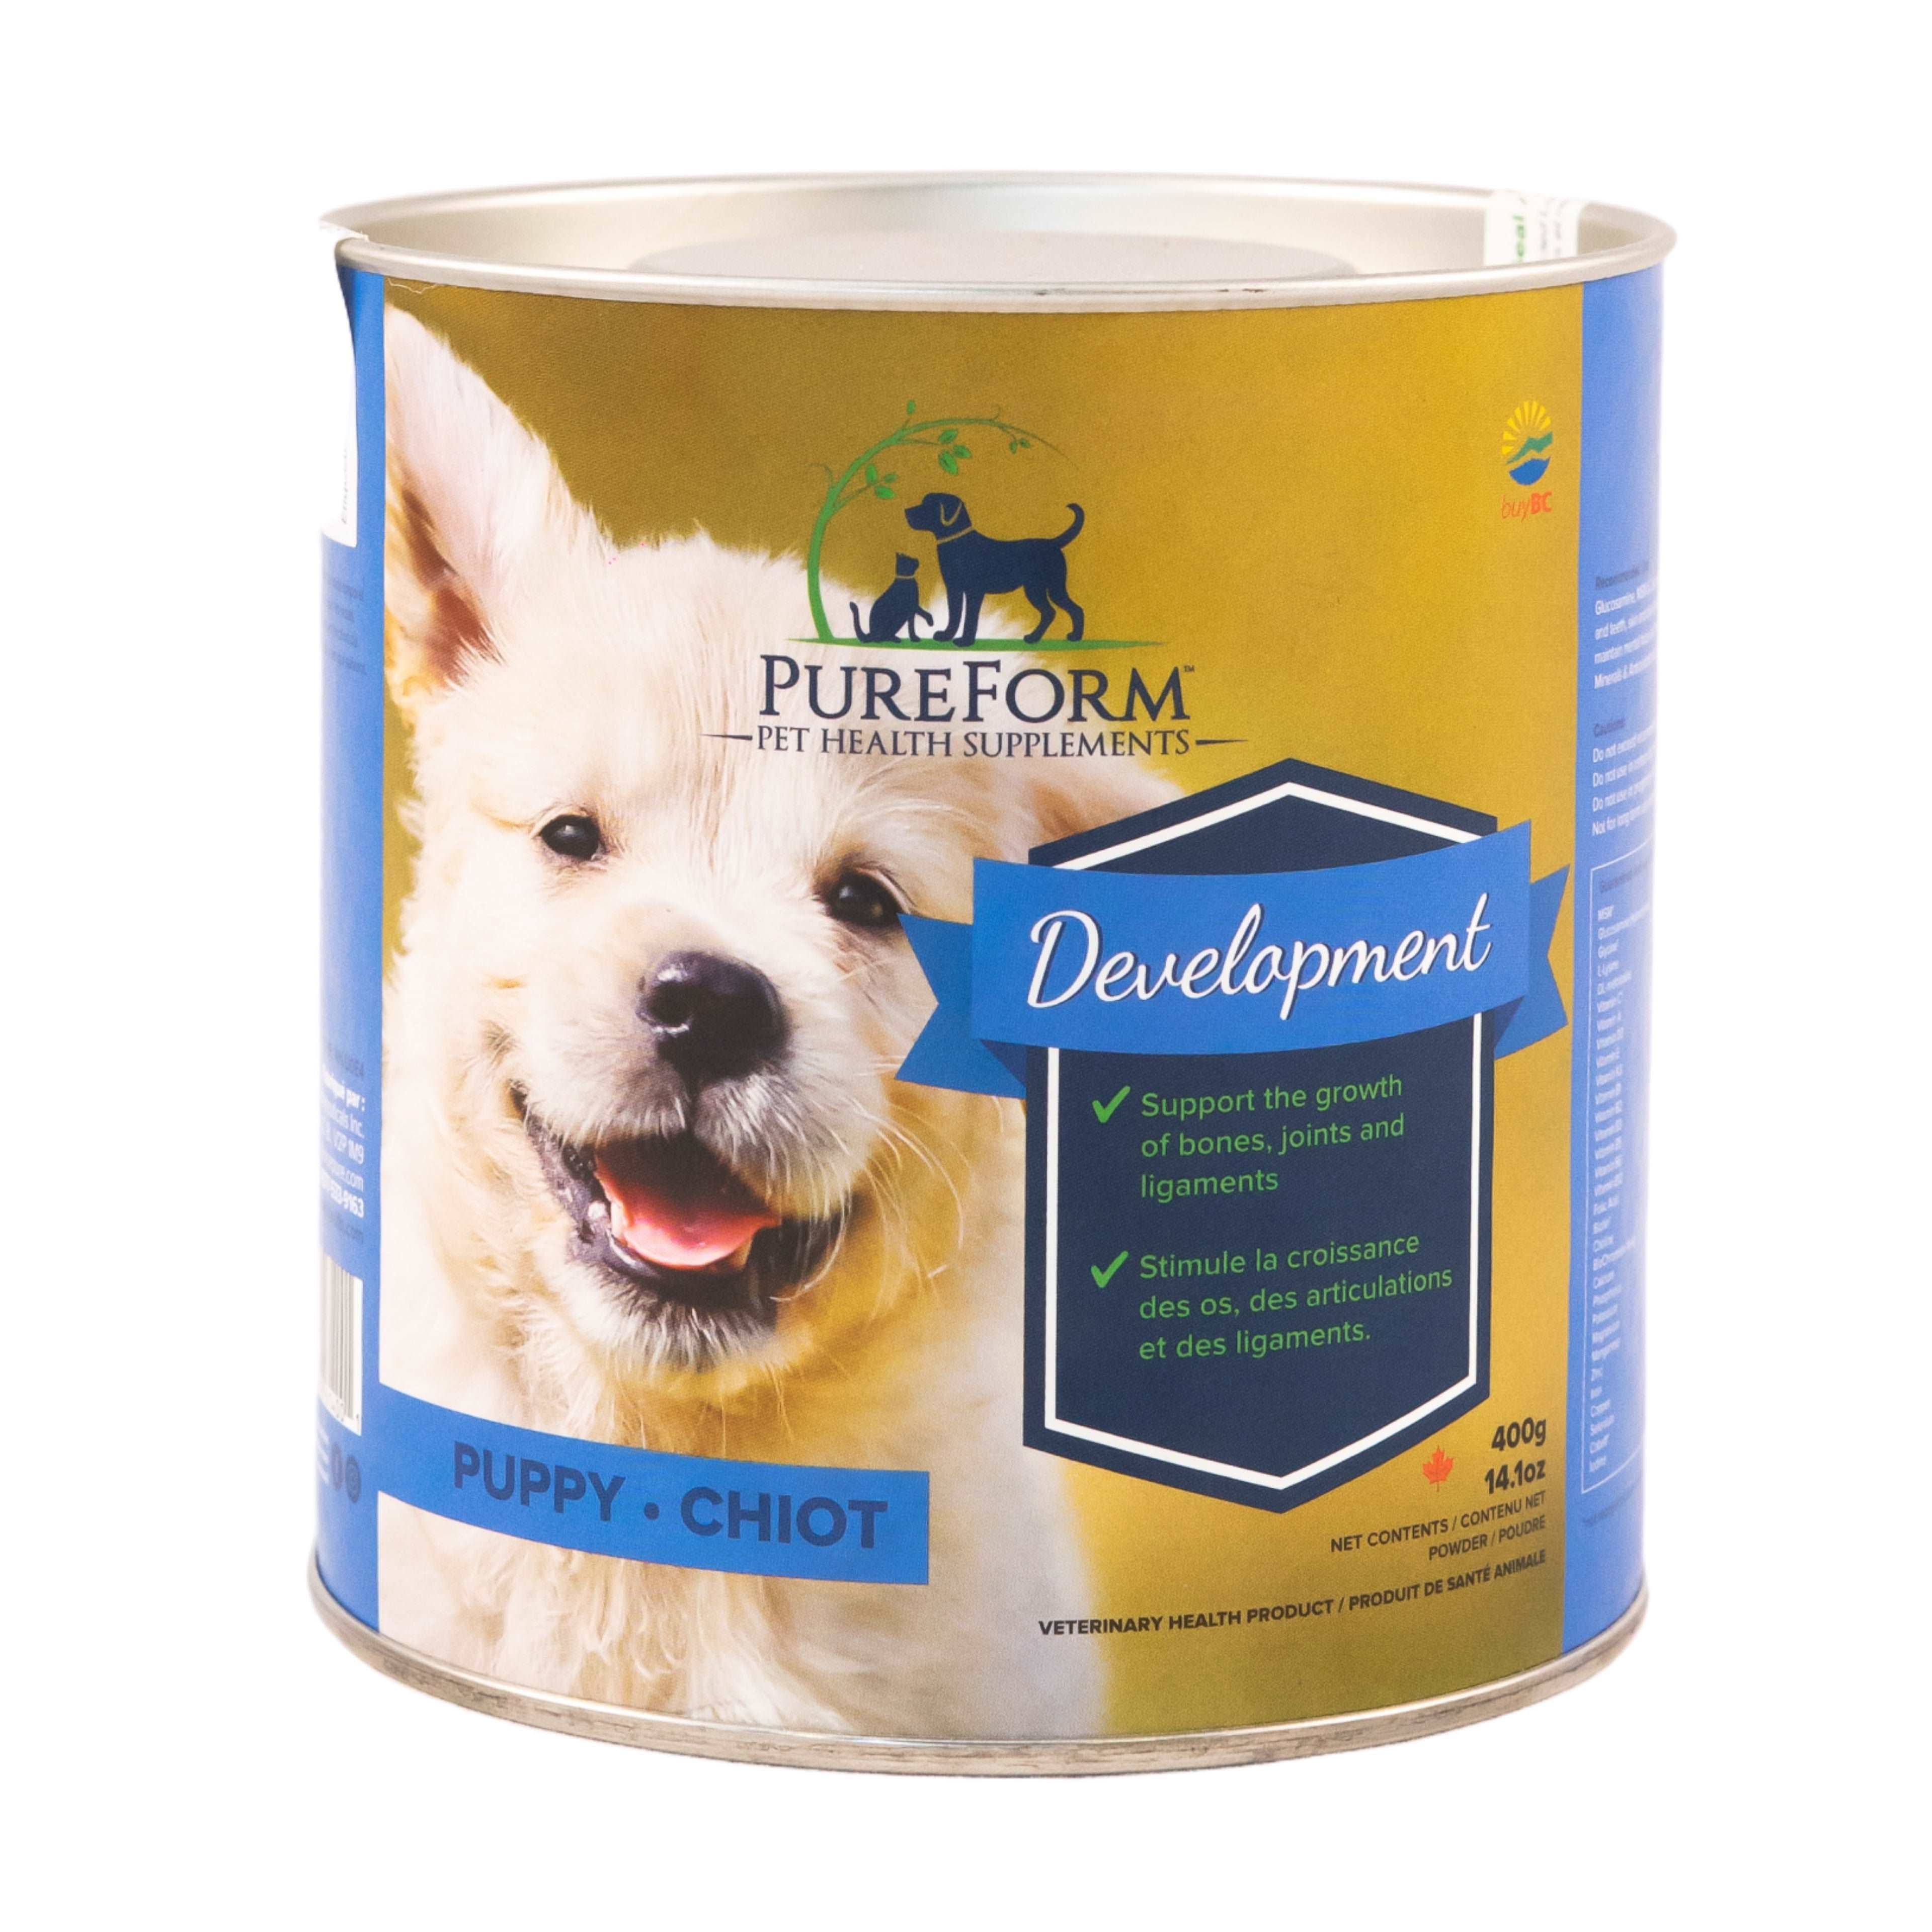 DEVELOPMENT - PureForm Pet Health Supplements